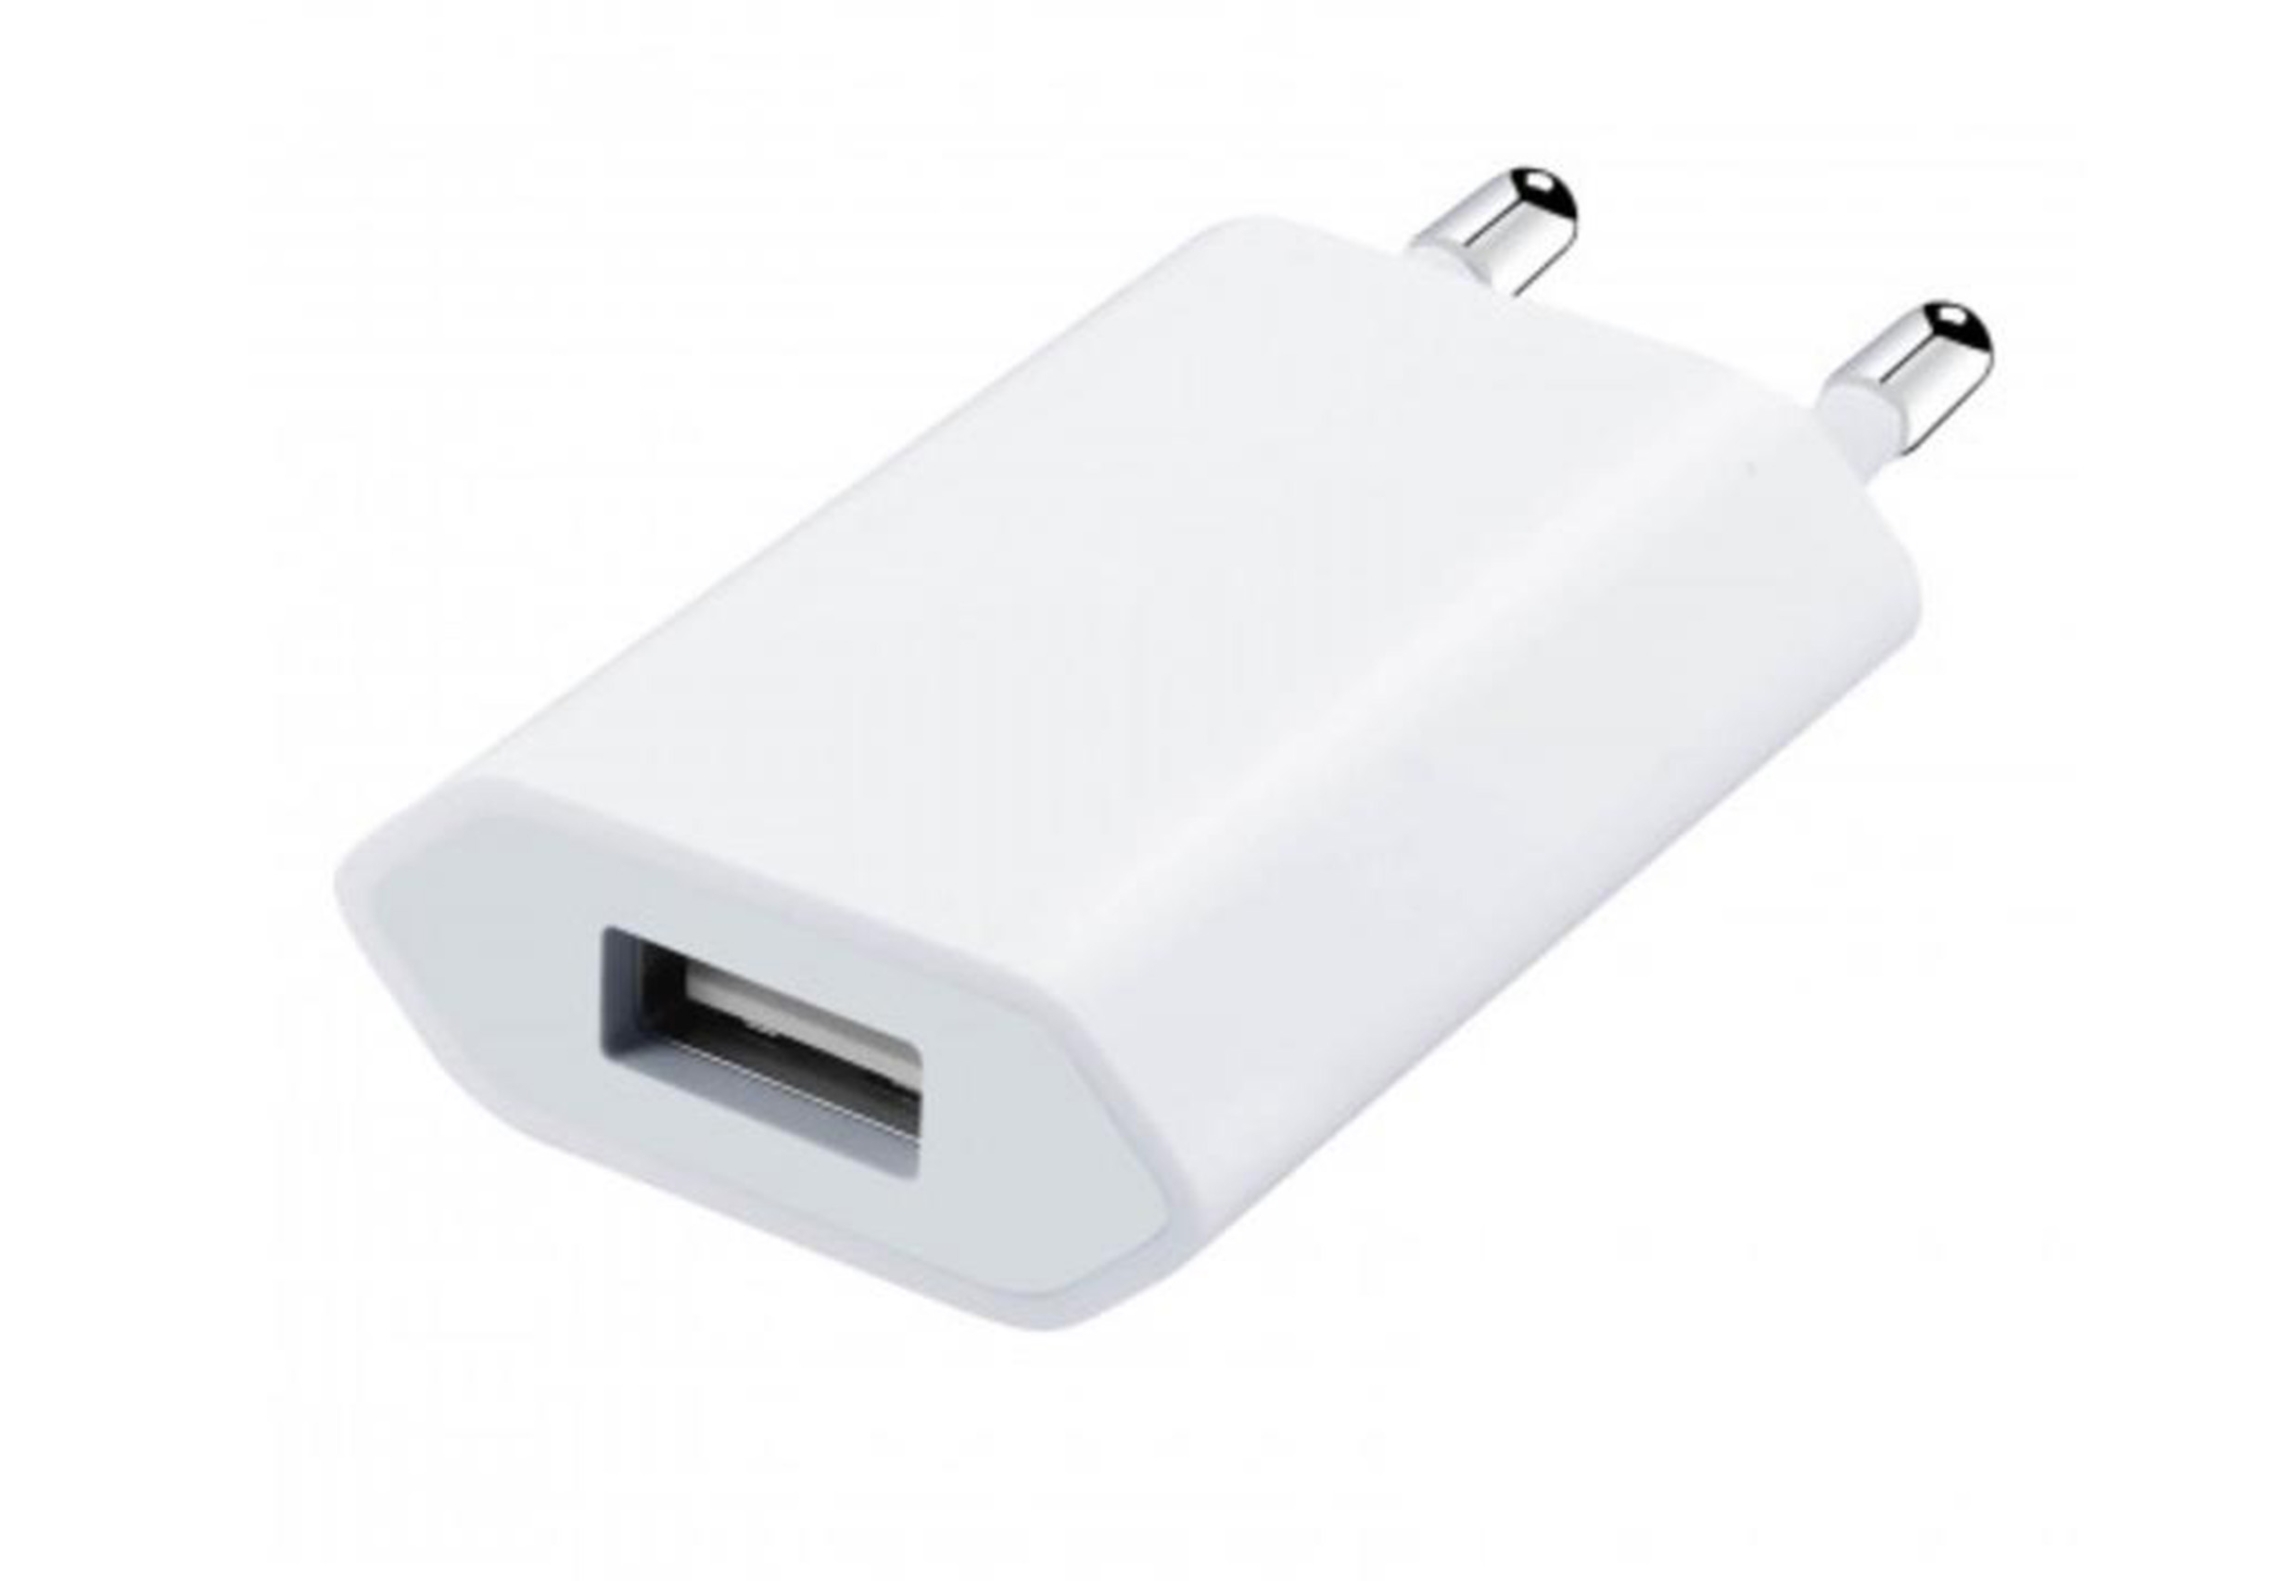 iPhone 6 USB Ladegerät Netzteil 5W + Lightning Ladekabel 1m